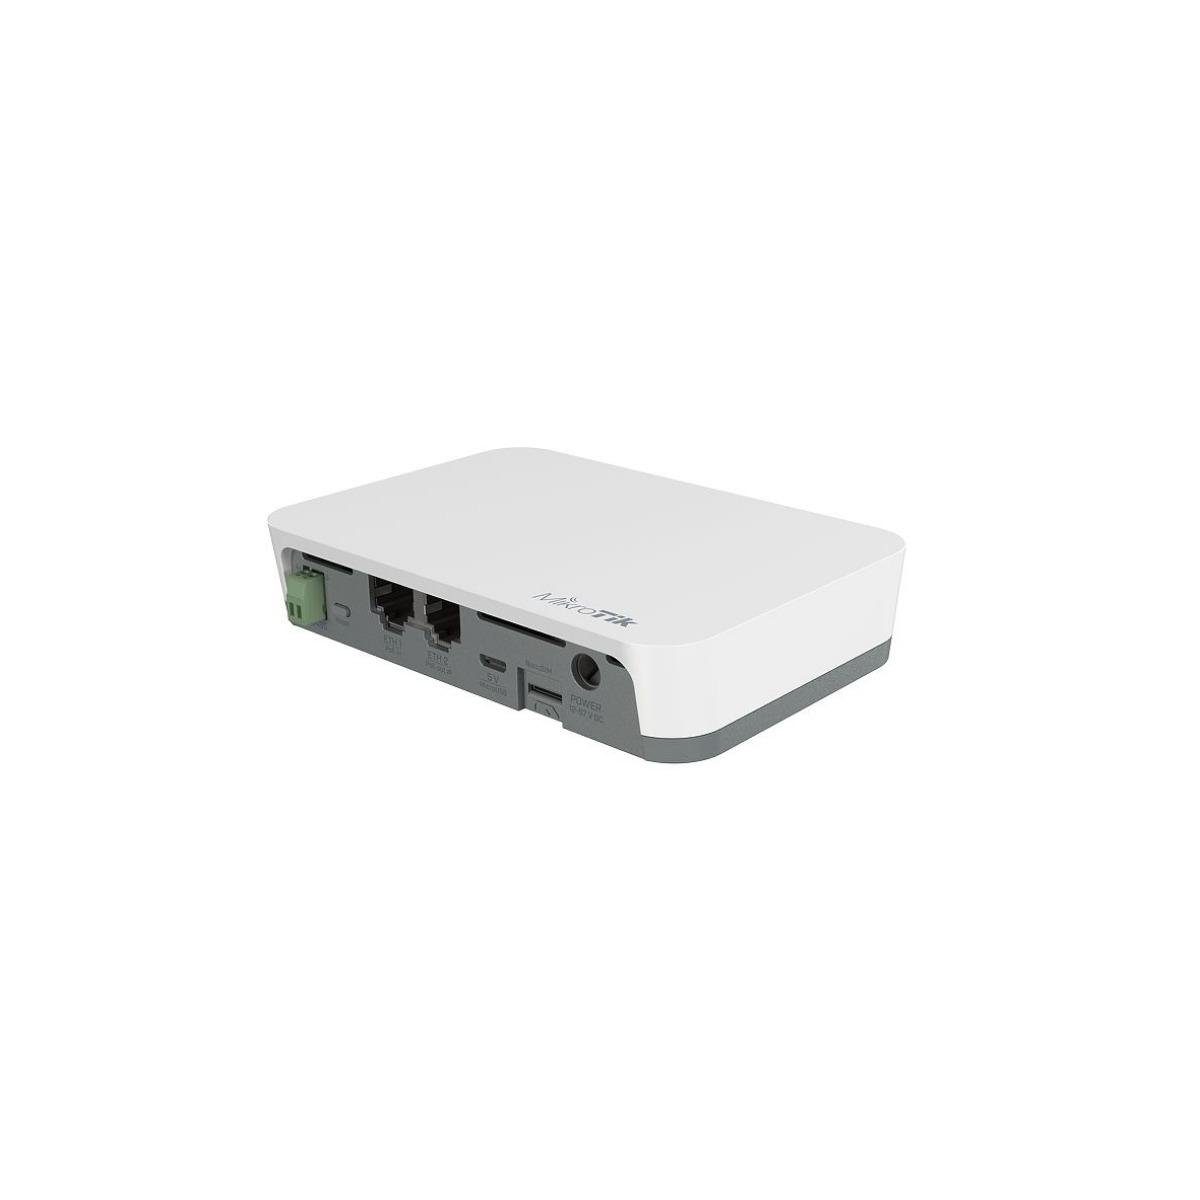 MikroTik RB924I-2ND-BT5&BG77 - GPS-Tracker Gateway vielseitige... für KNOT IoT 